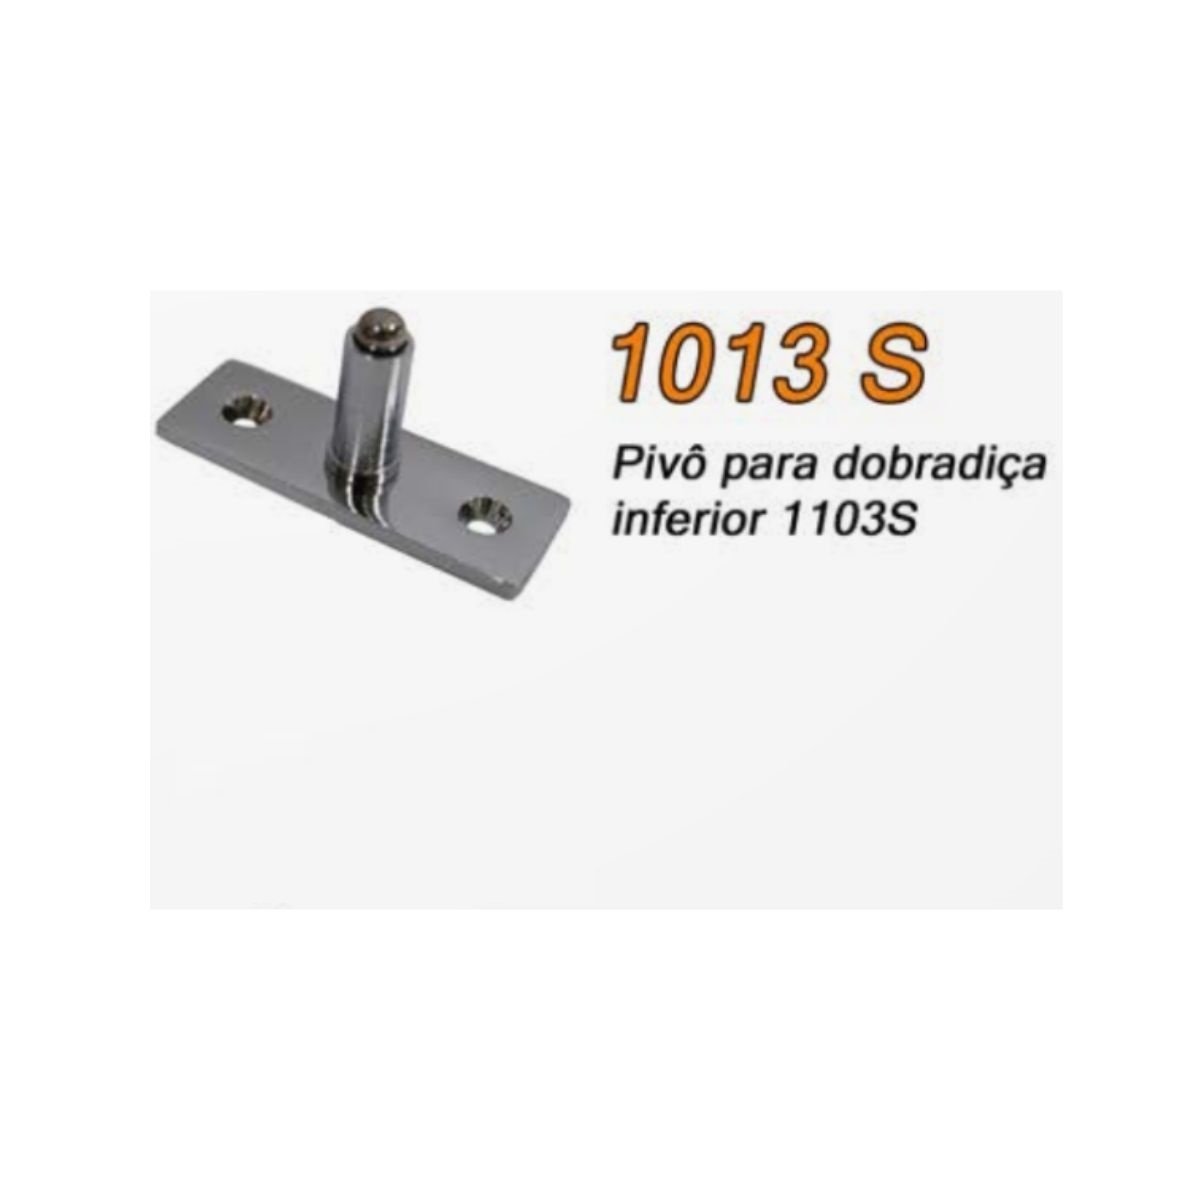 1013 S - Pivô inferior para porta pivotante de vidro temperado blindex - Preto - 2